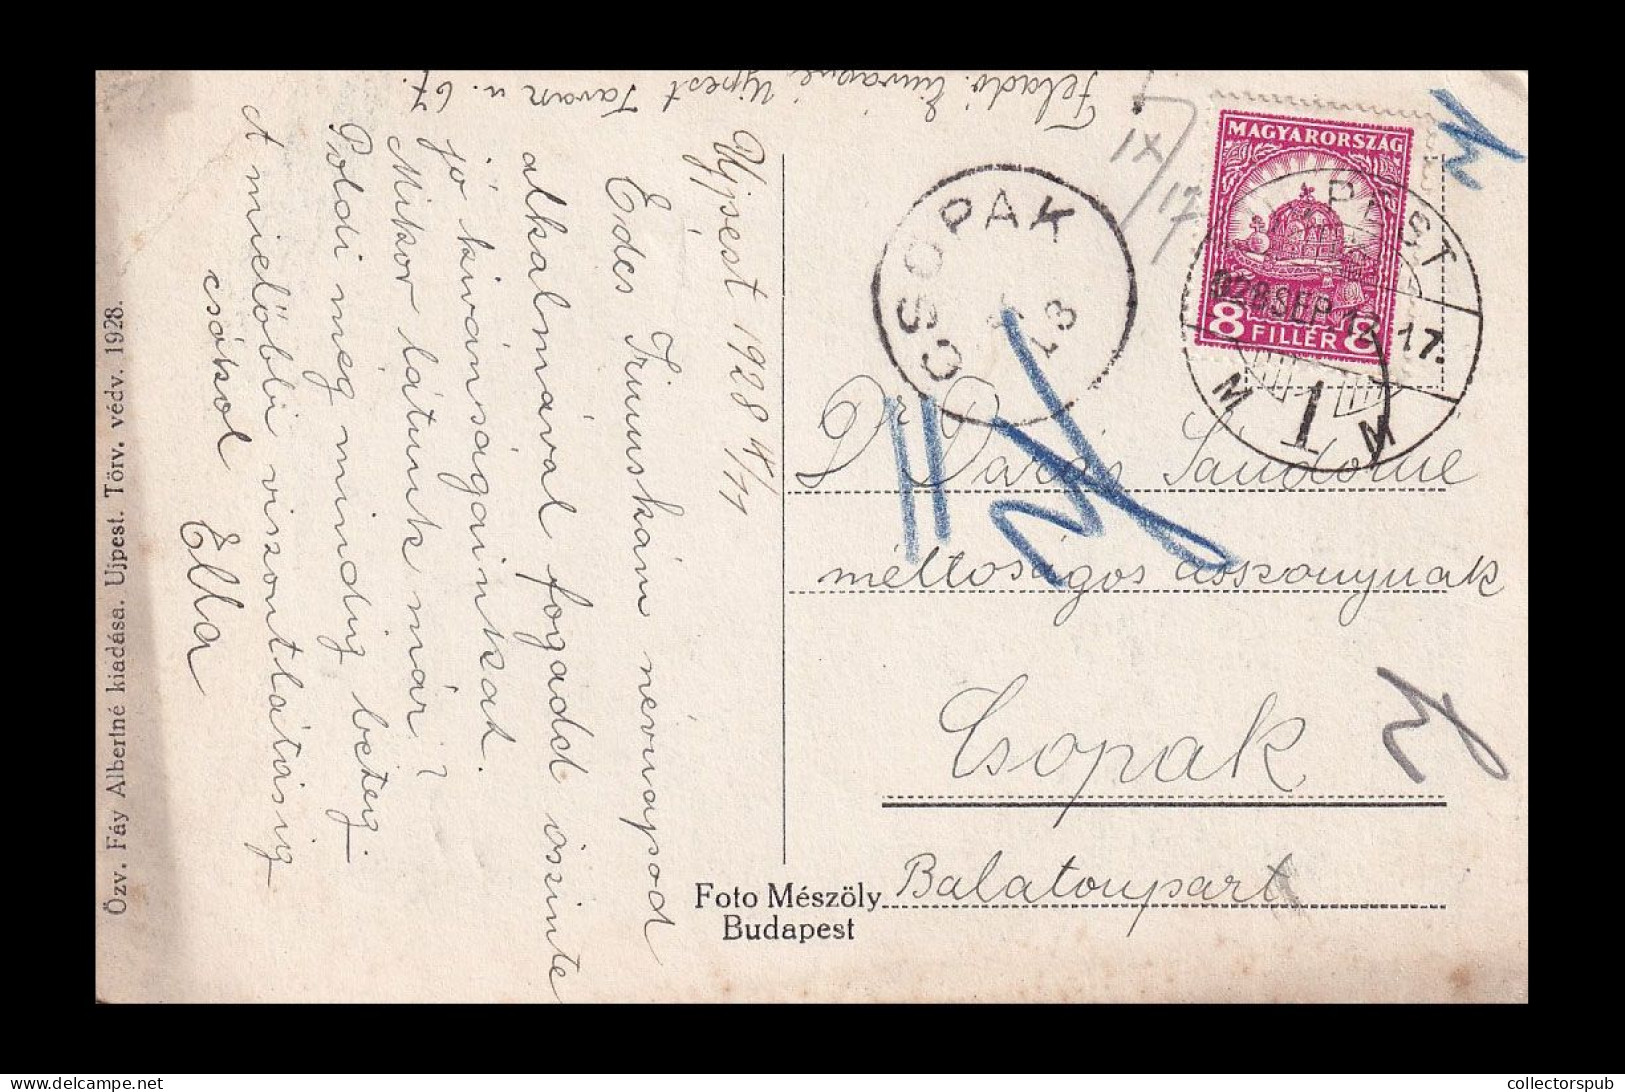 UJPEST 1928. Vintage Postcard - Ungarn